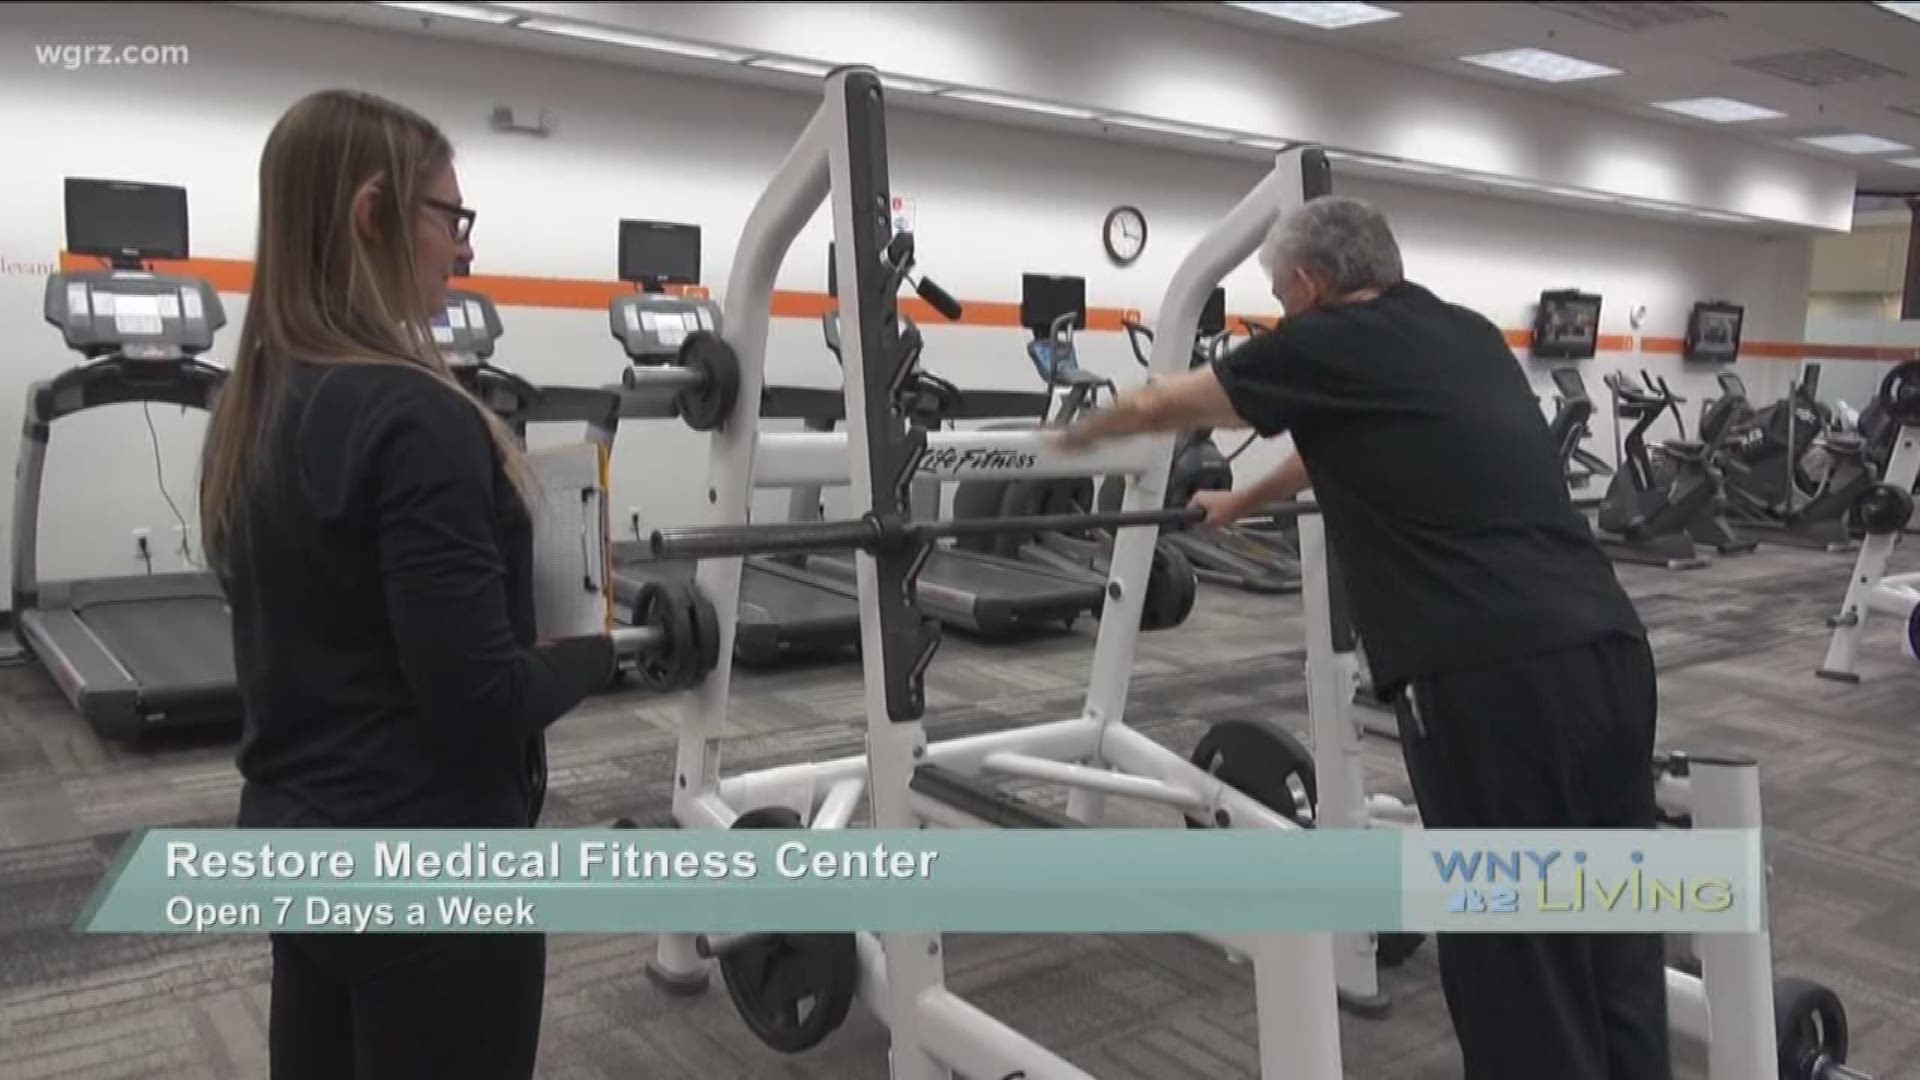 WNY Living - July 16 - WECK Restore Medical Fitness Center